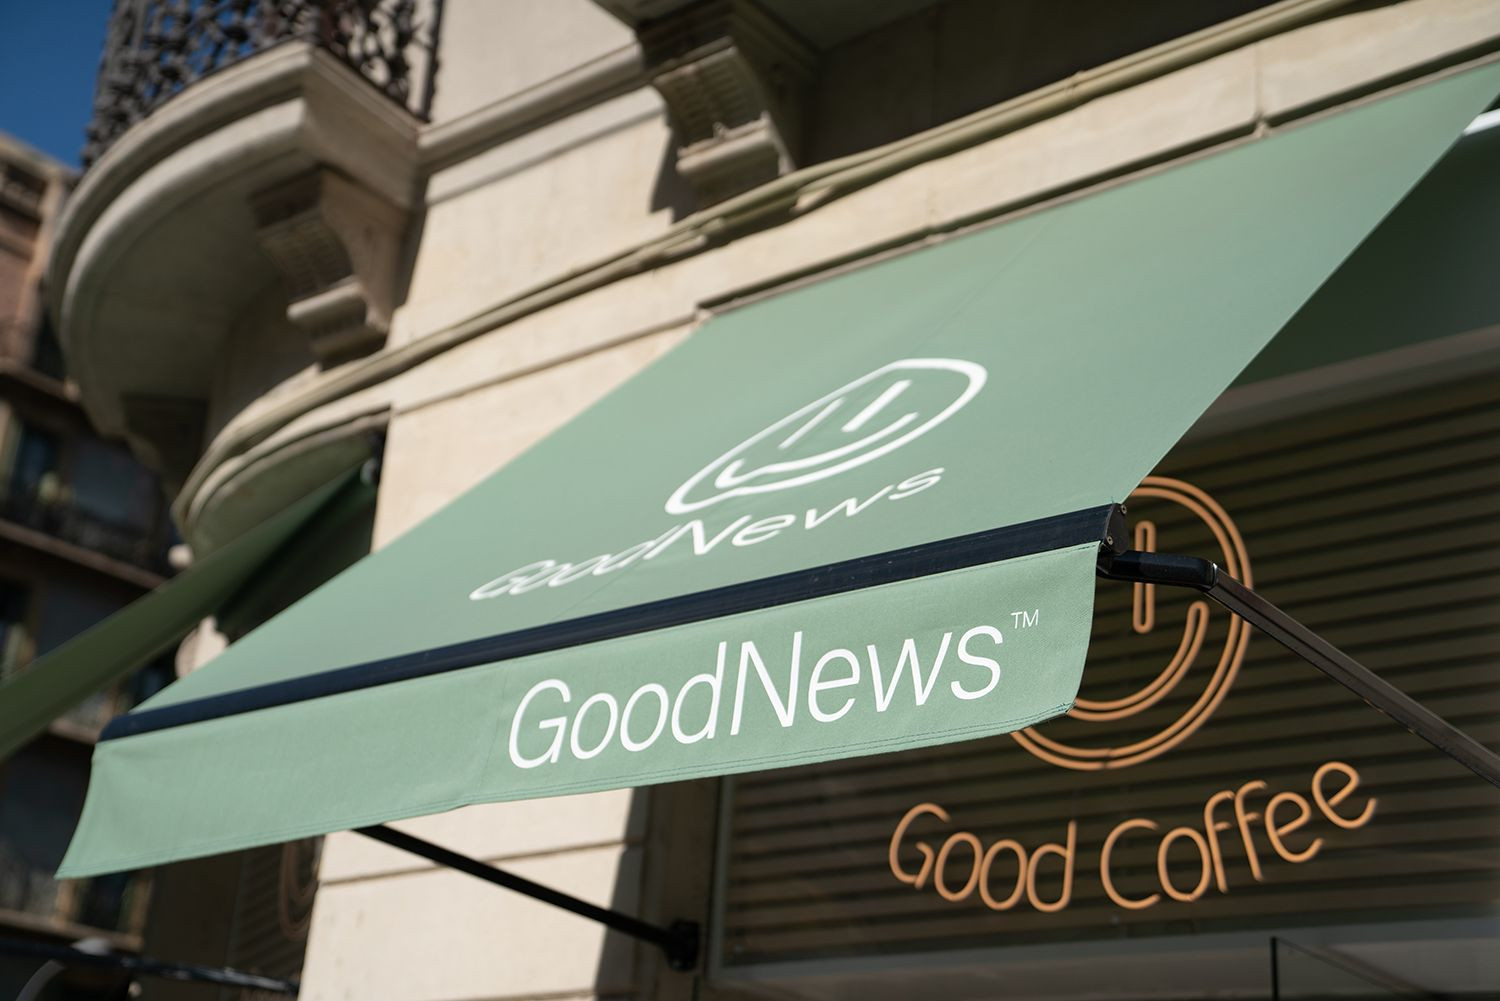 Exterior de un comercio de la startup barcelonesa GoodNews / GOOD NEWS